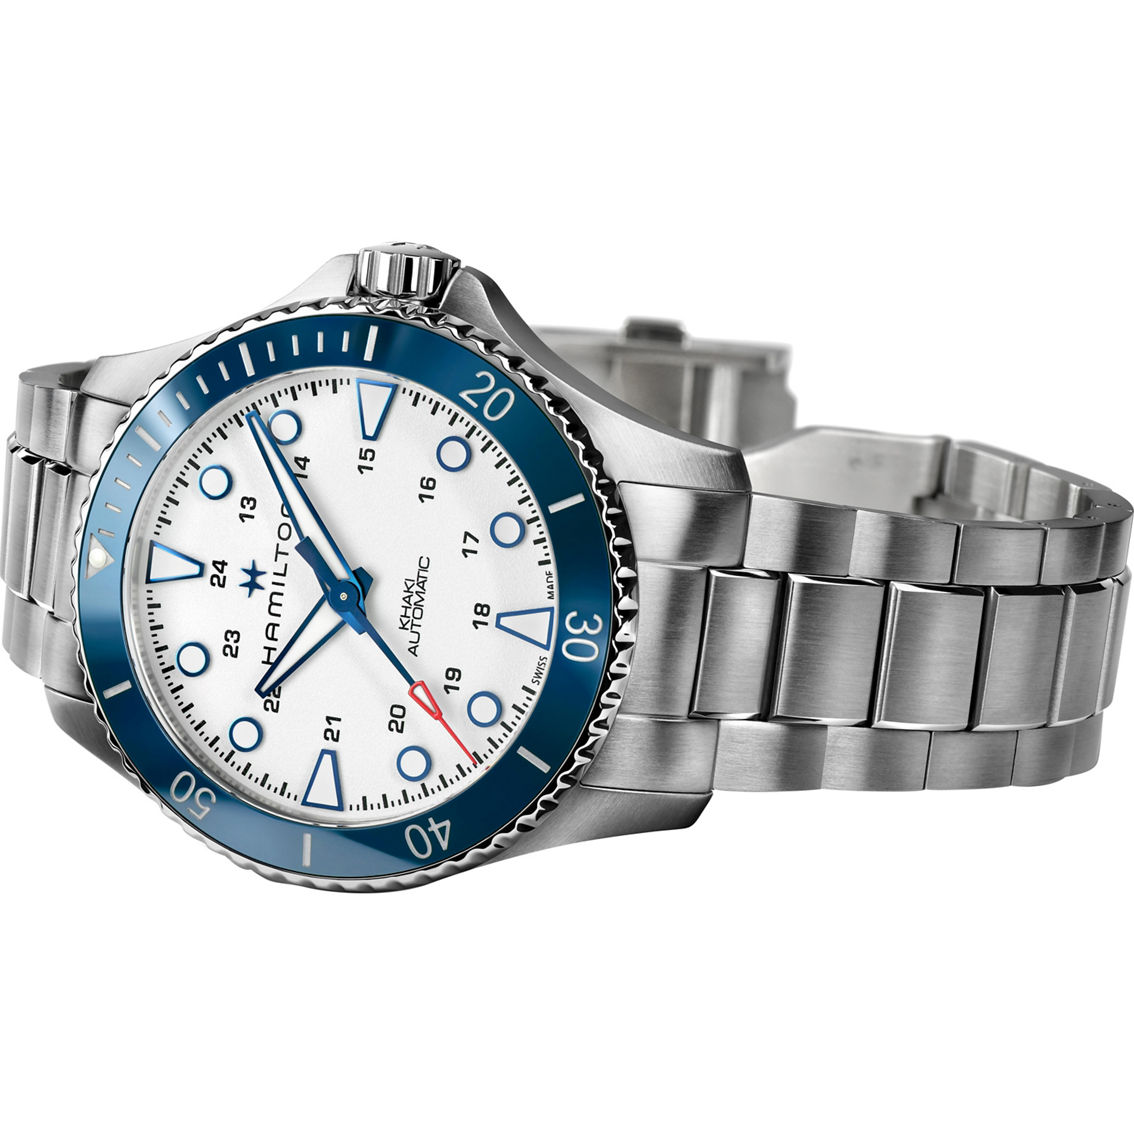 Hamilton Men's / Women's Khaki Navy Scuba Automatic Watch H82505150 - Image 2 of 3